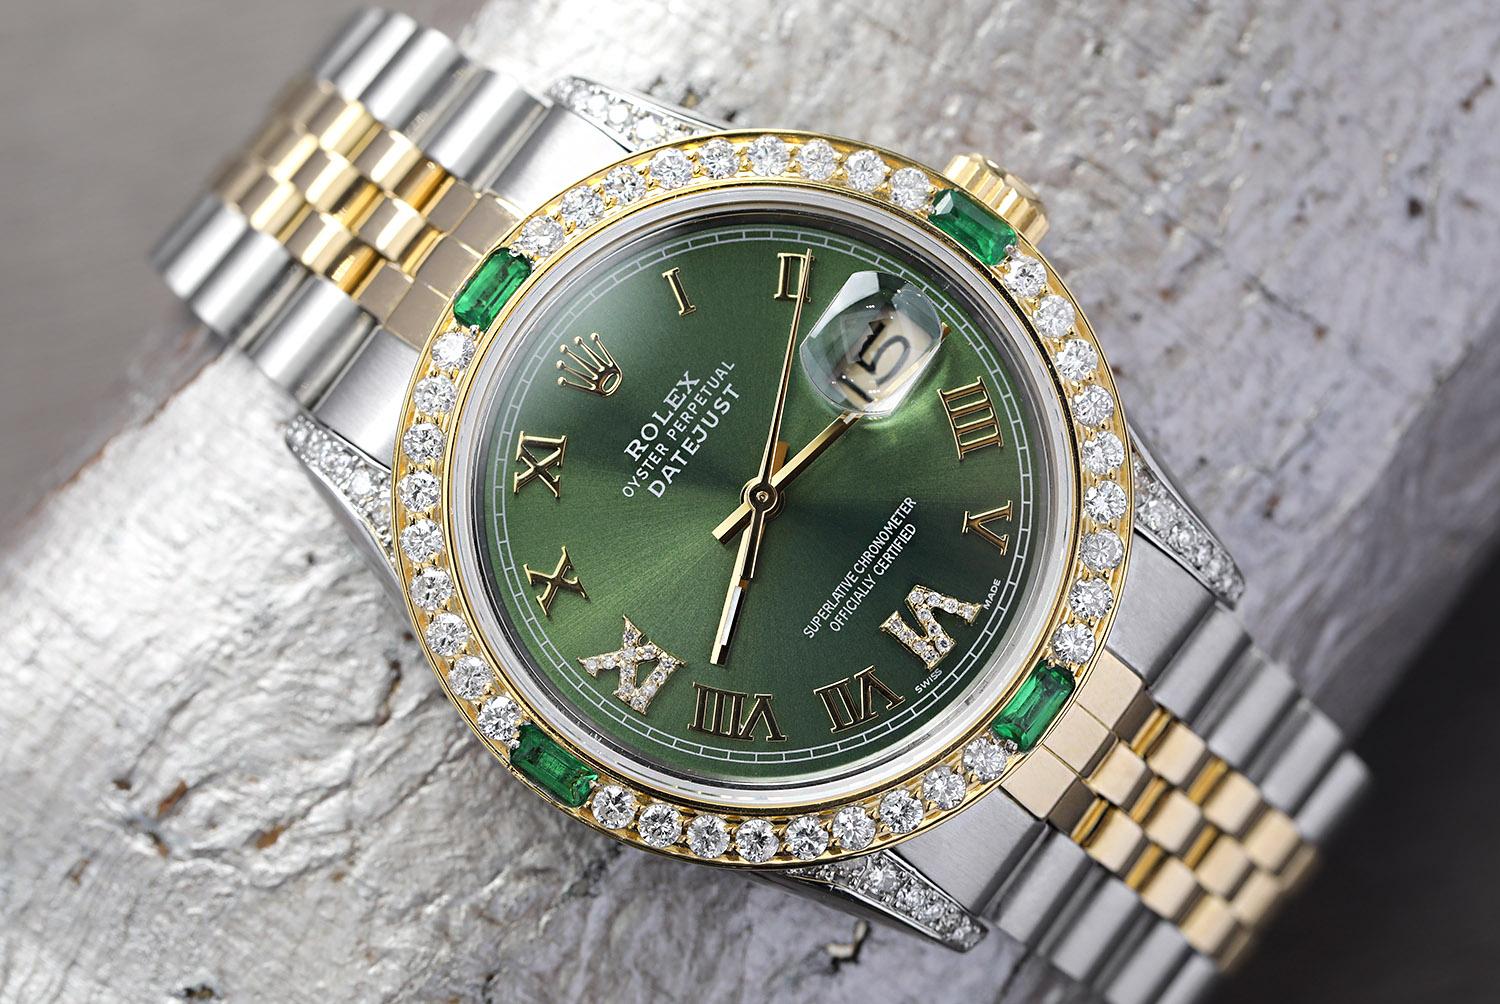 Rolex 36mm Datejust grünes Zifferblatt mit Diamanten, Diamanten / Smaragde Lünette zwei Tone Watch Jubilee Band
